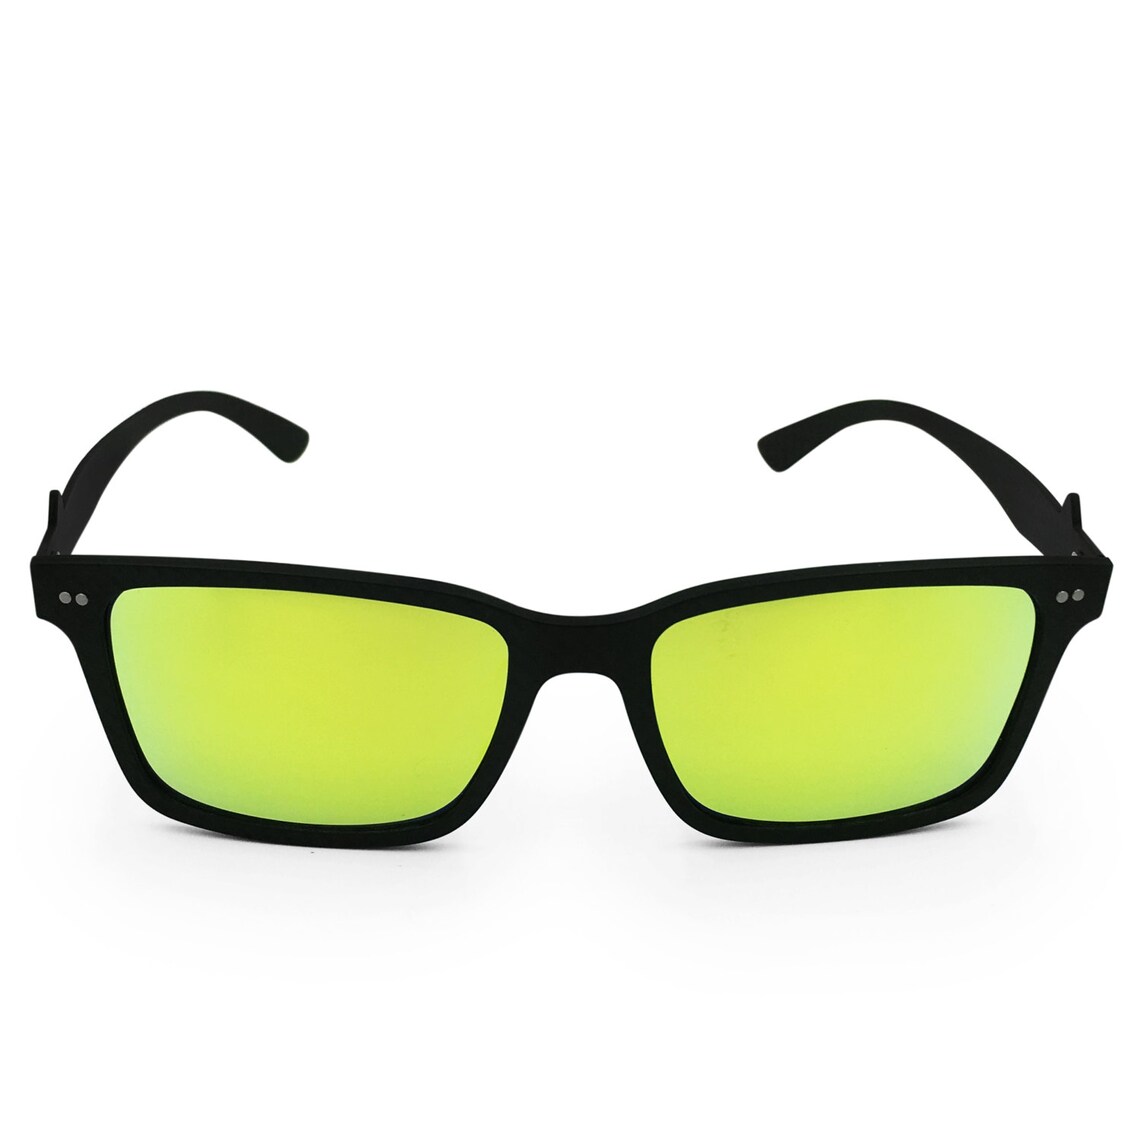 Boostnatics Carbon Fiber Boosted Turbo Shades/Sunglasses | Etsy